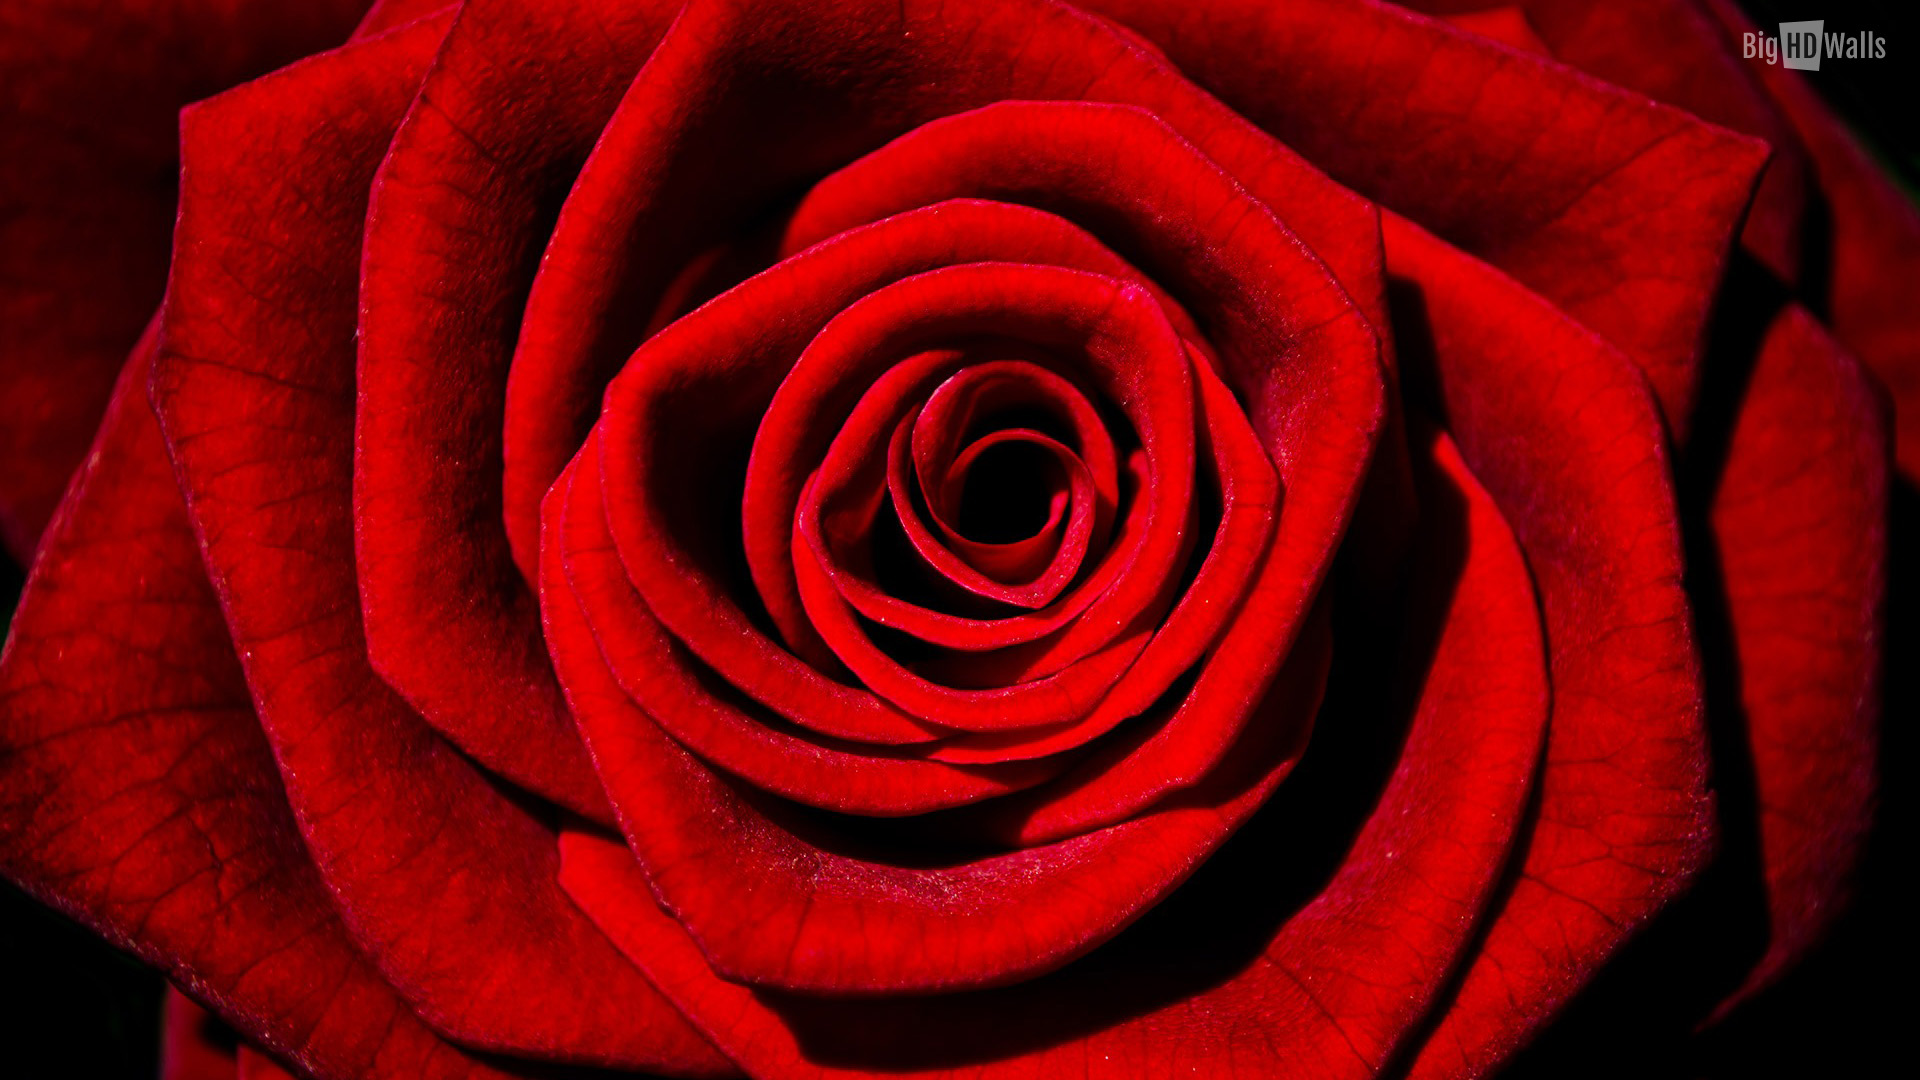 10 Beautiful HD Wallpapers of Roses | BigHDWalls